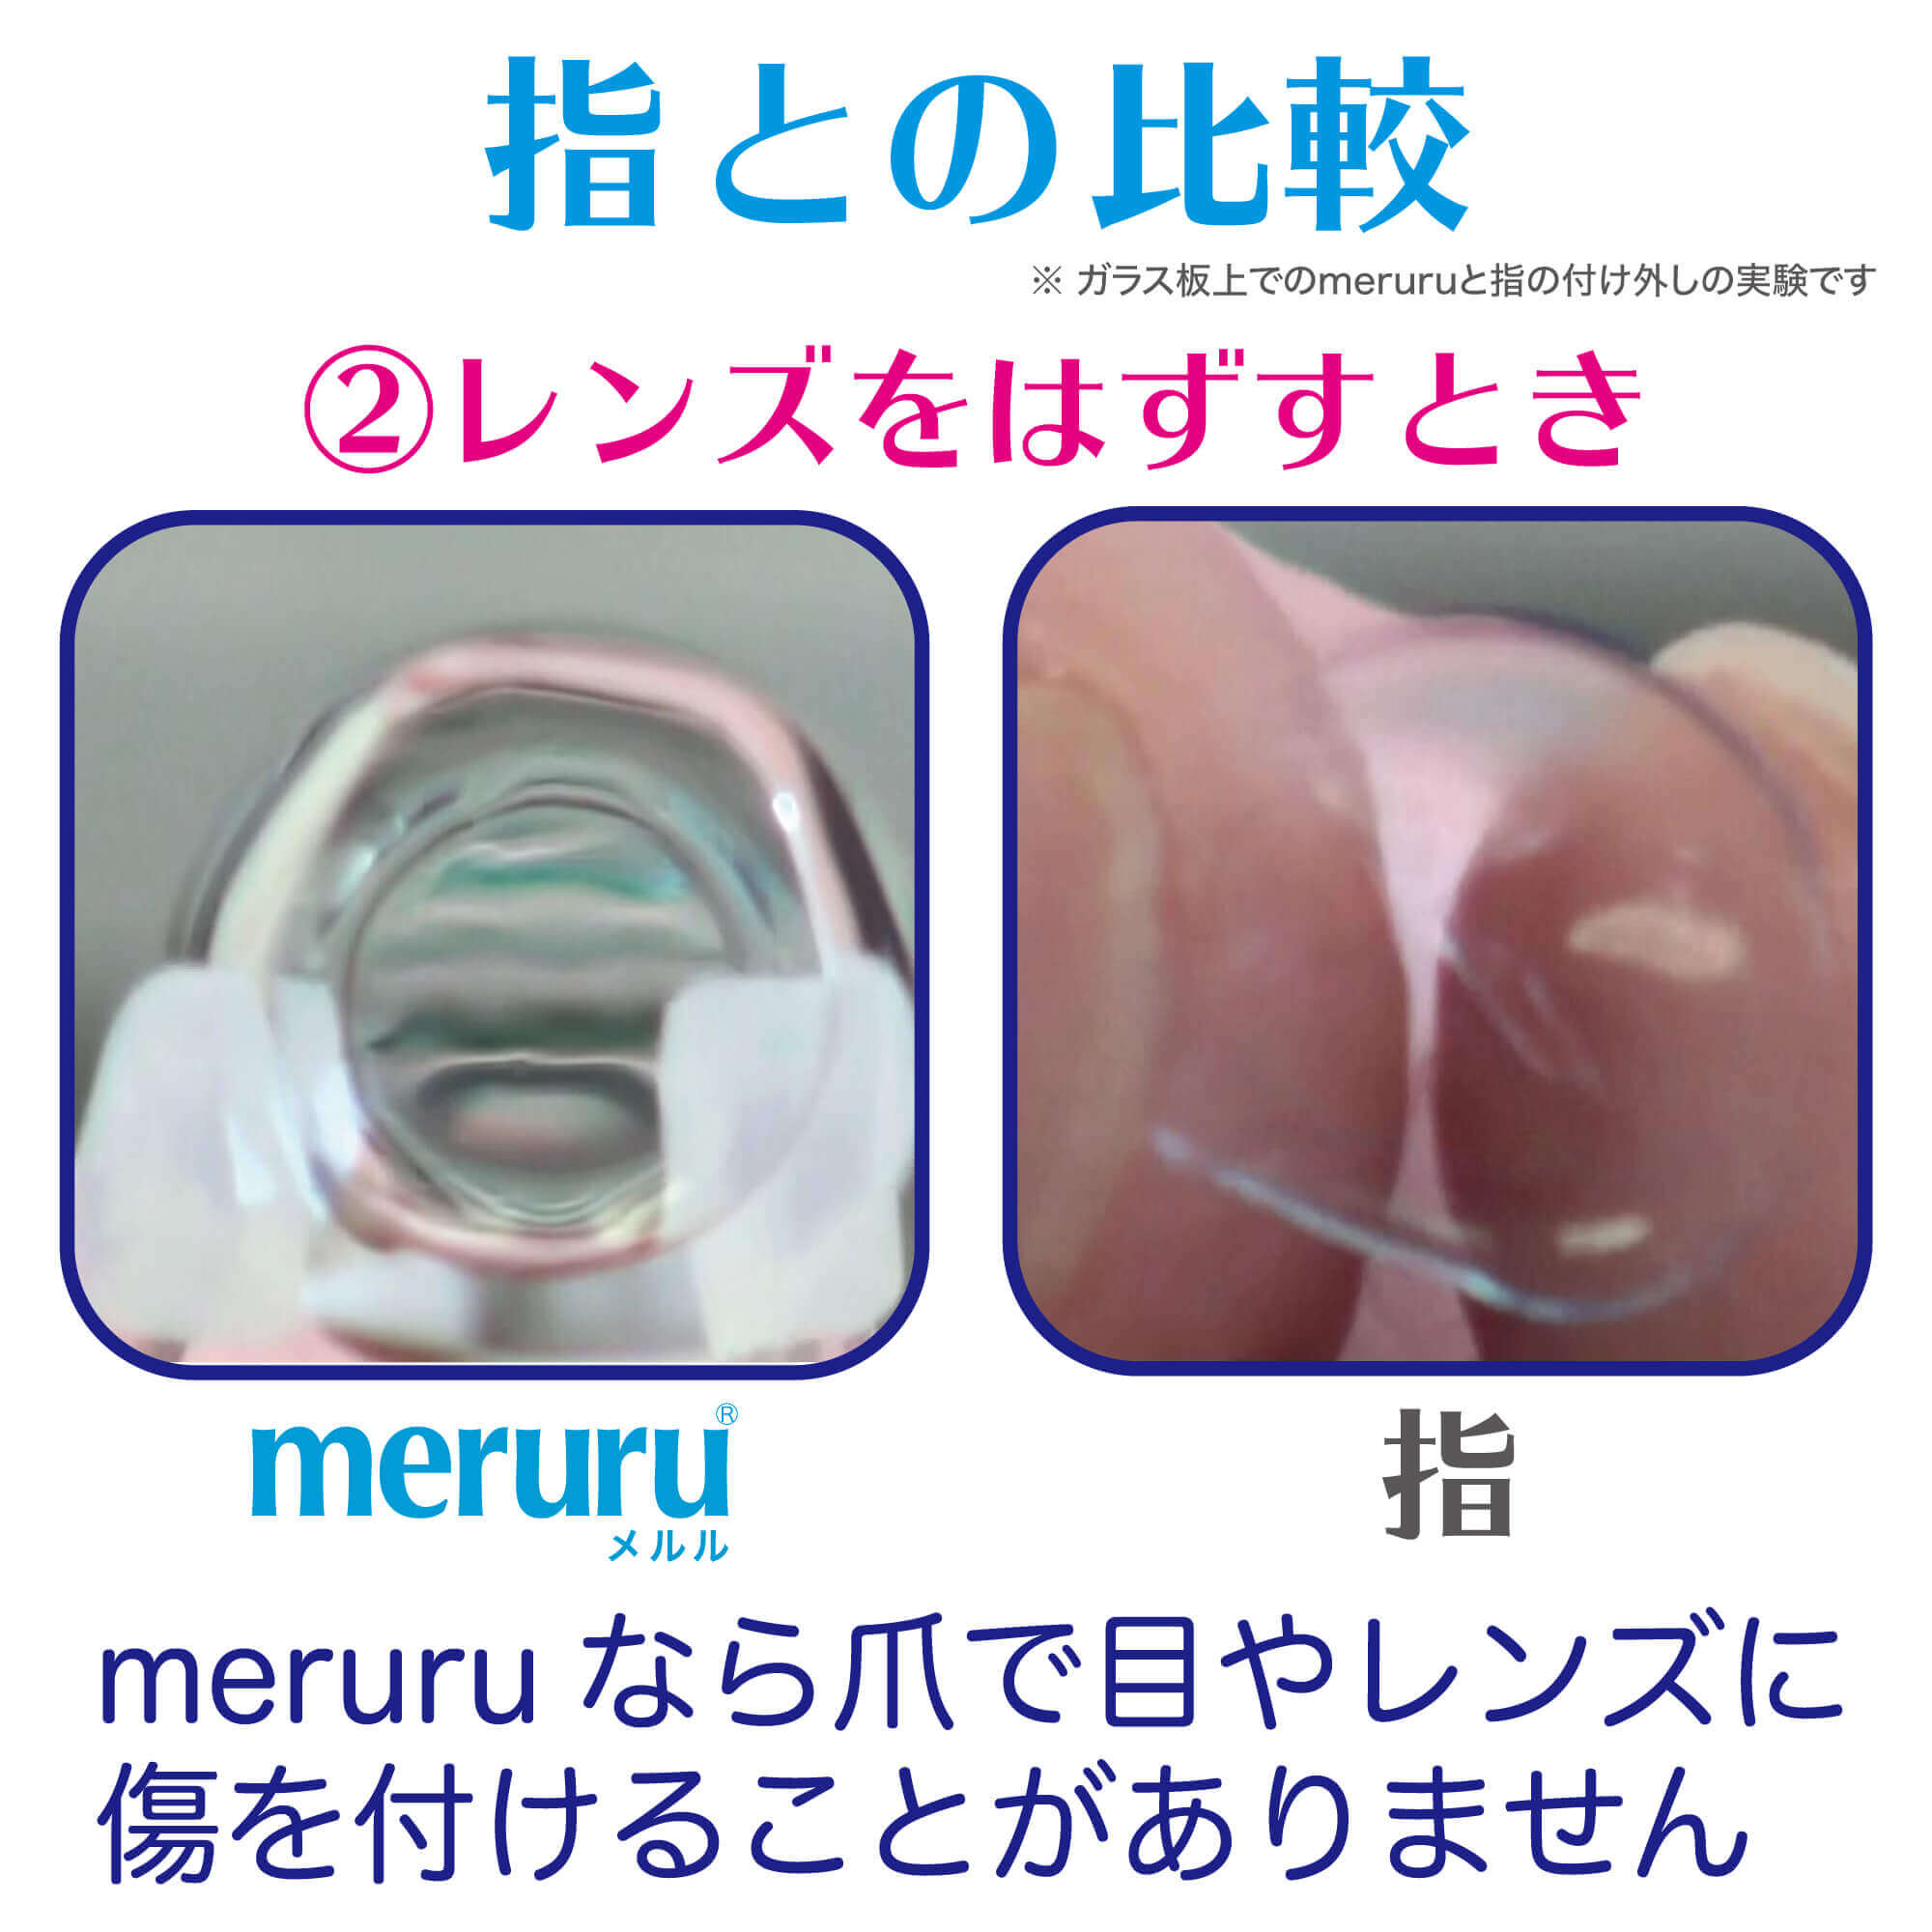 meruru（メルル）ソフト/カラーコンタクトつけはずし器具